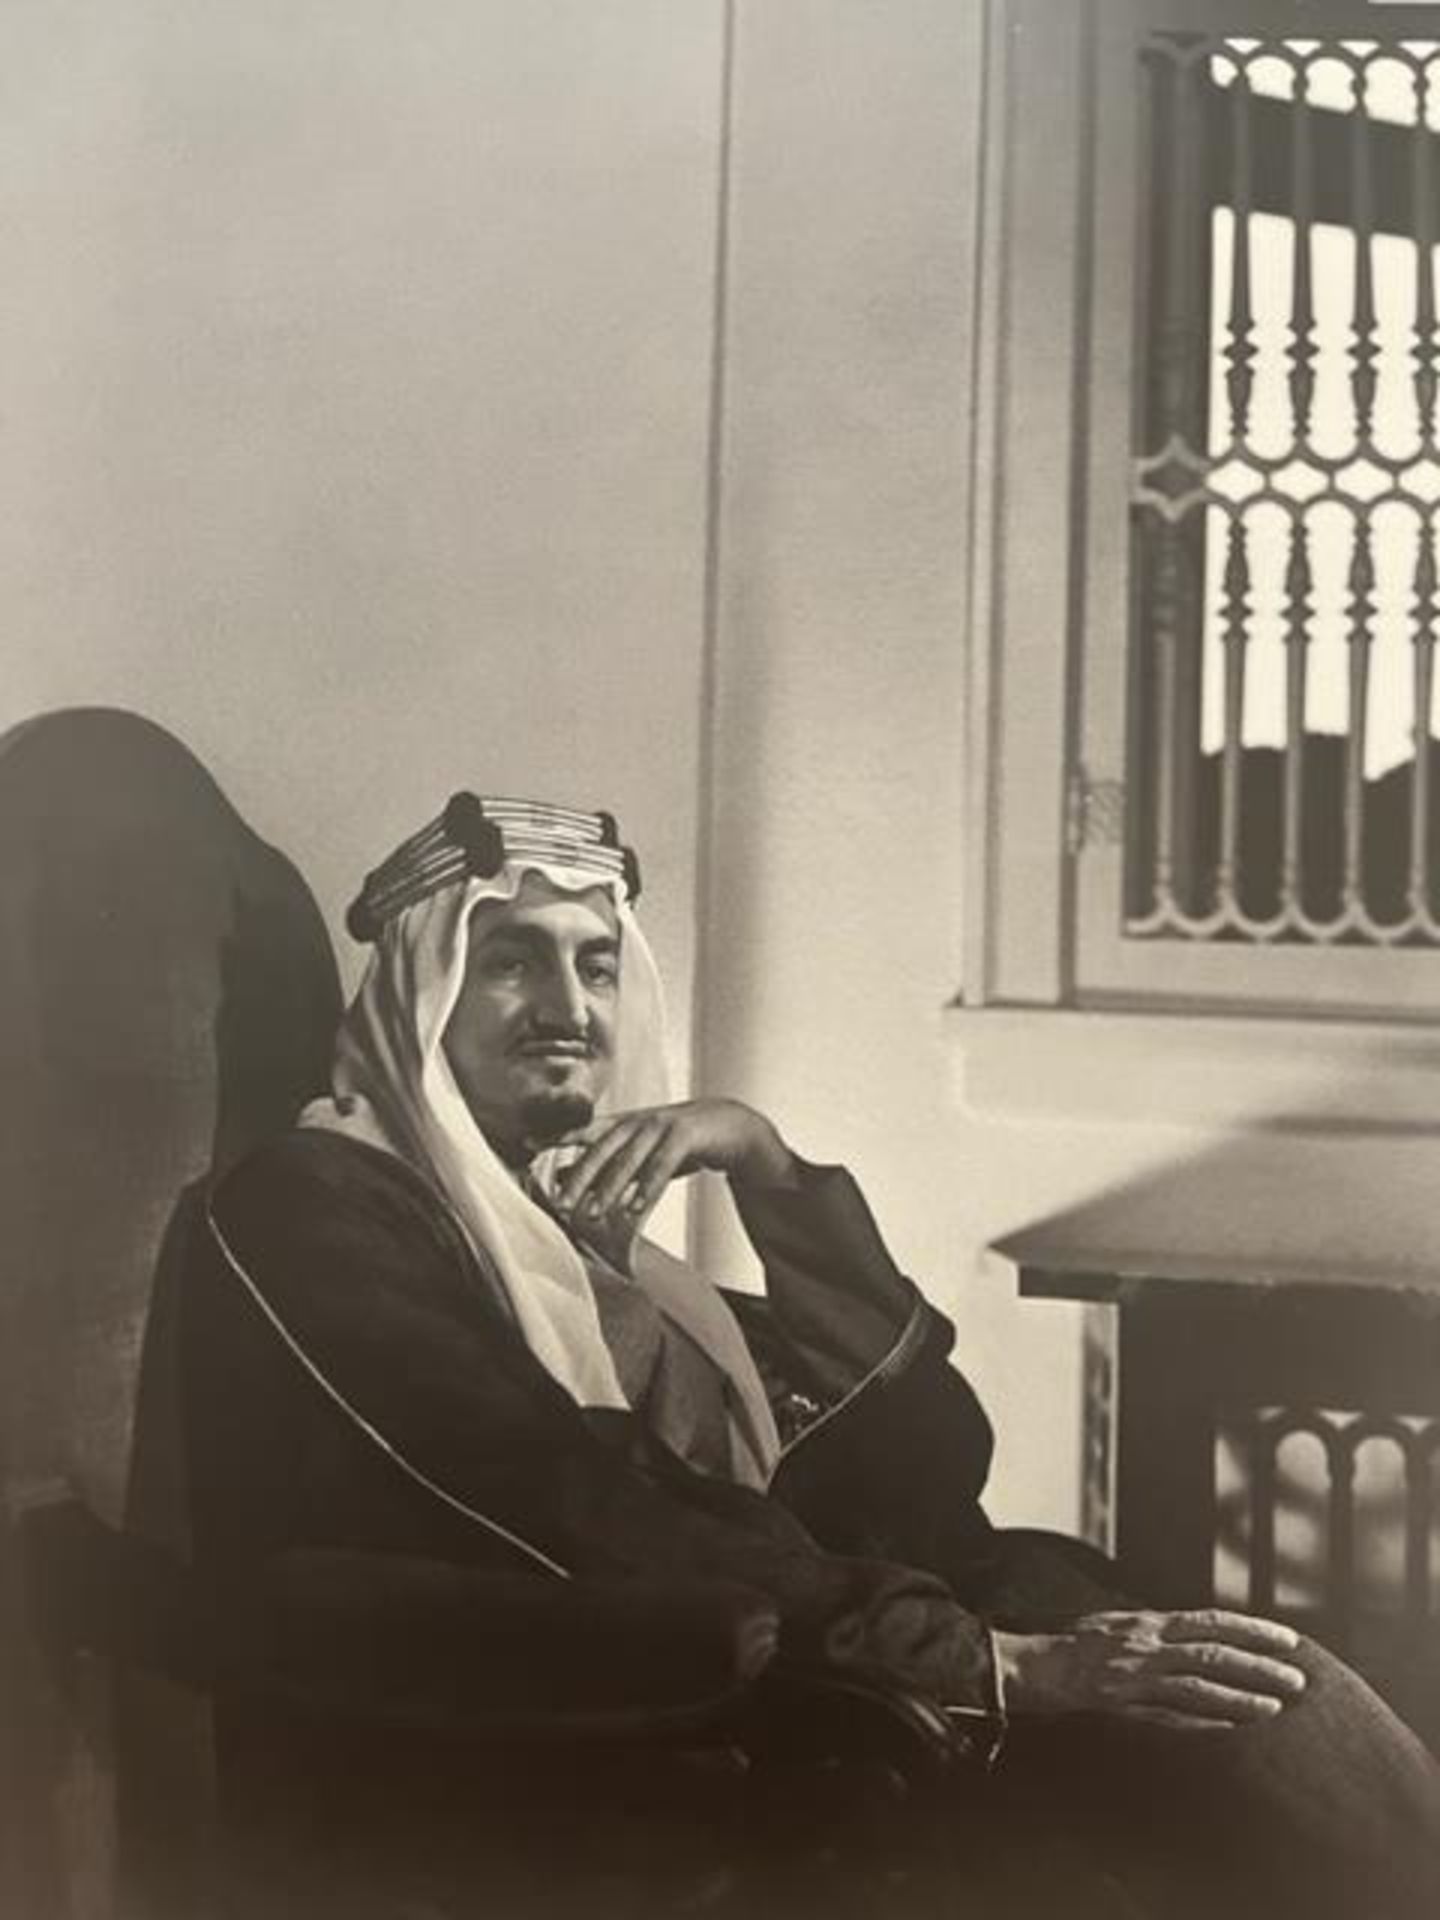 Yousuf Karsh "King Faisal" Print.